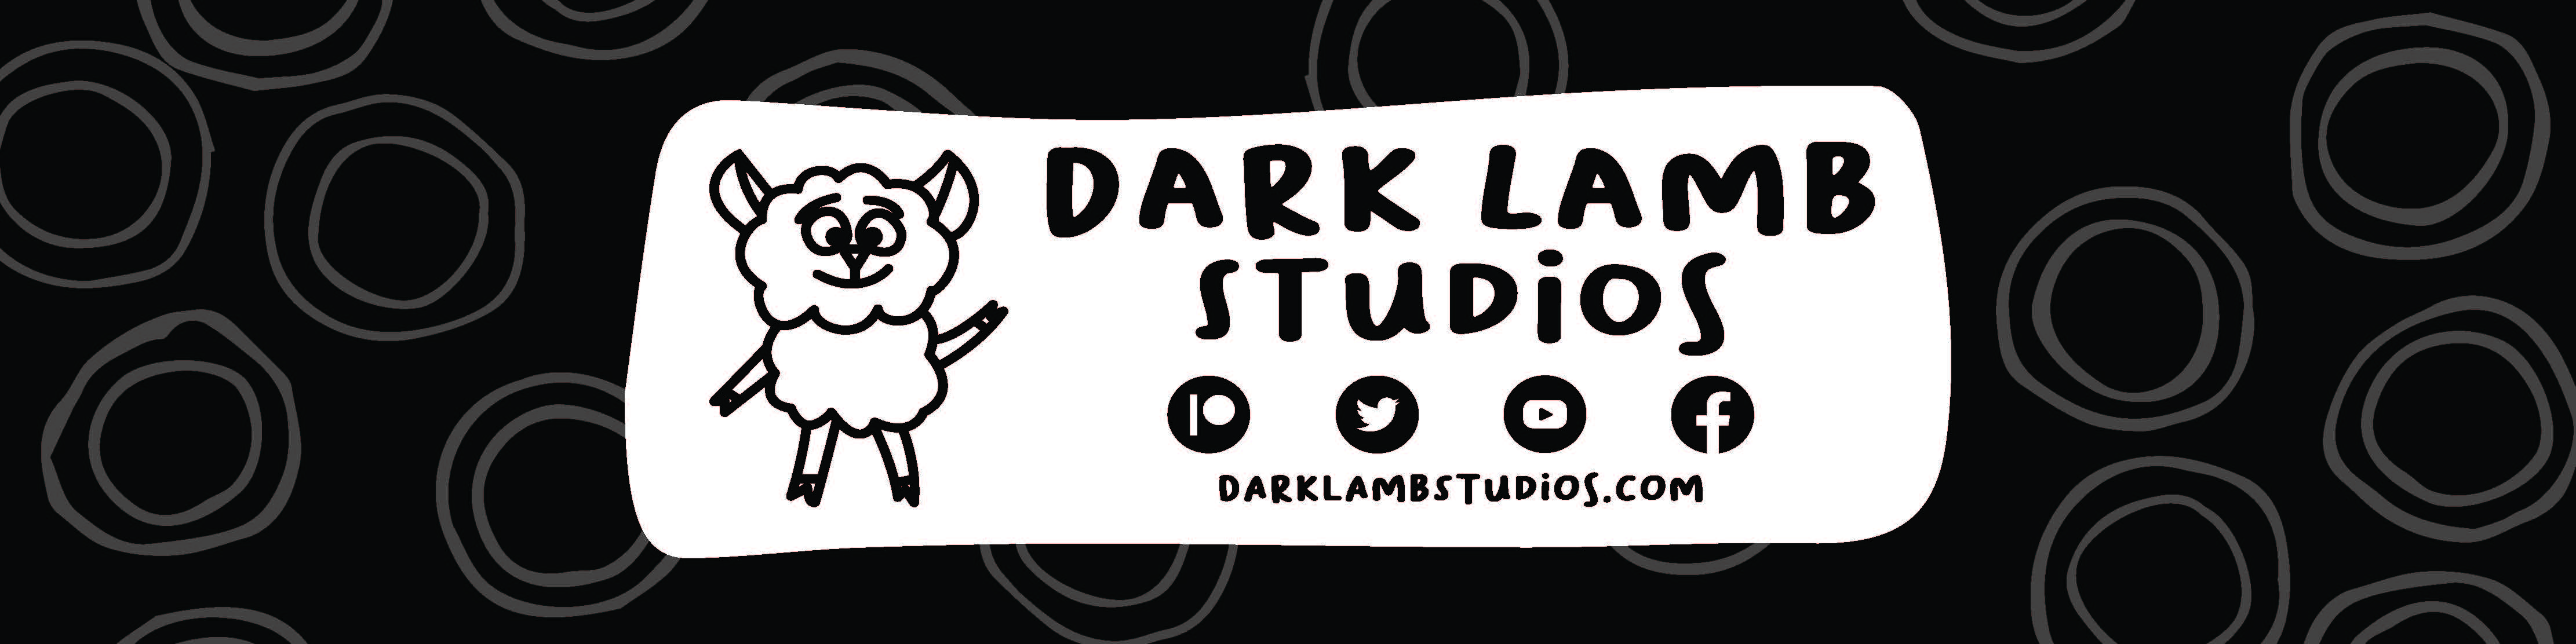 Dark Lamb Studios Header - Lambo the Mascot is waving. Catch us on Patreon, Twitter, YouTube, and Facebook.